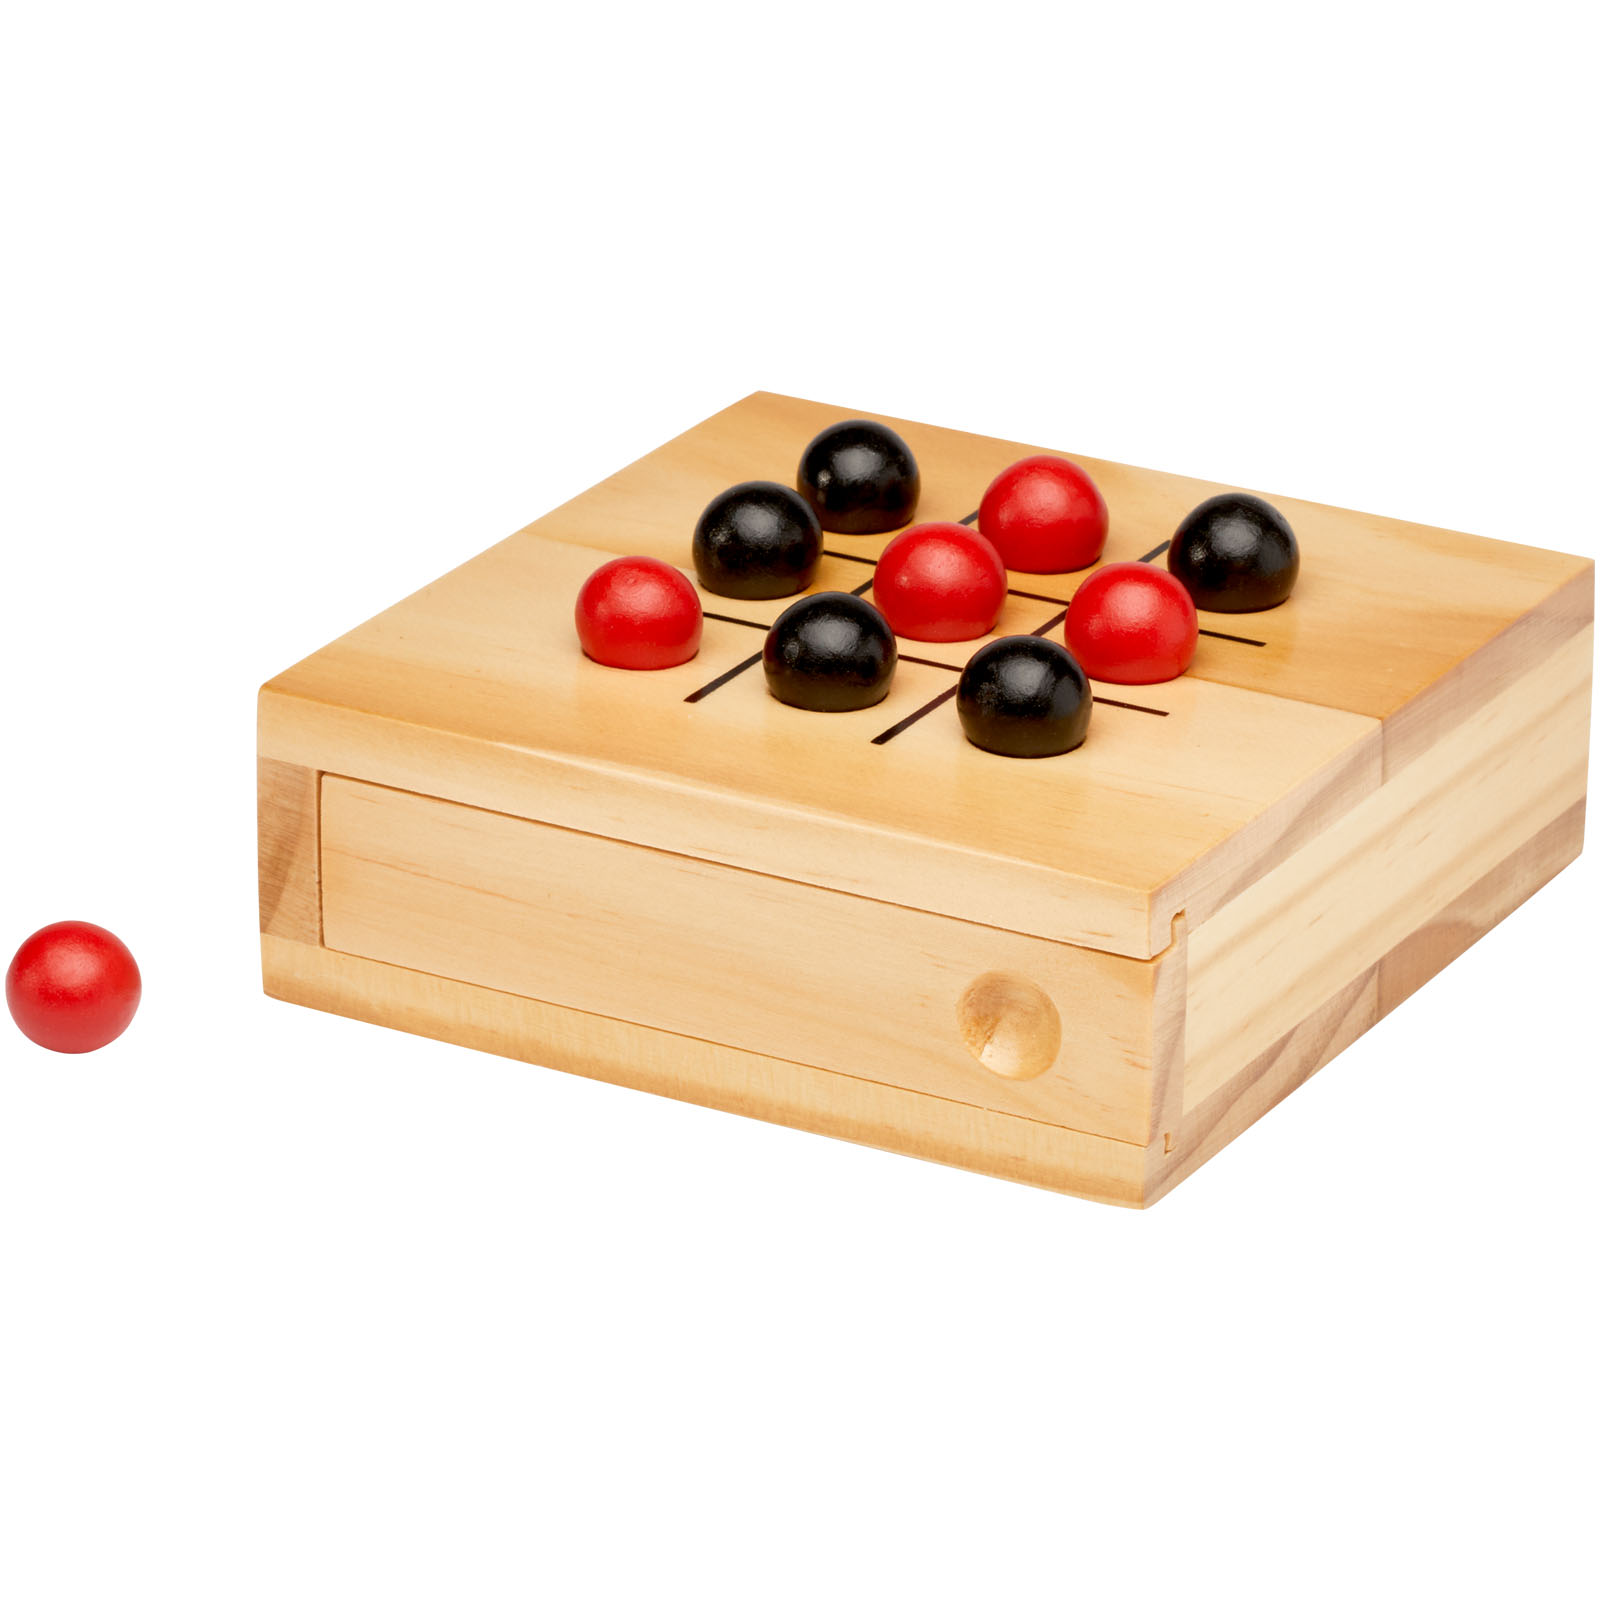 Indoor Games - Strobus wooden tic-tac-toe game